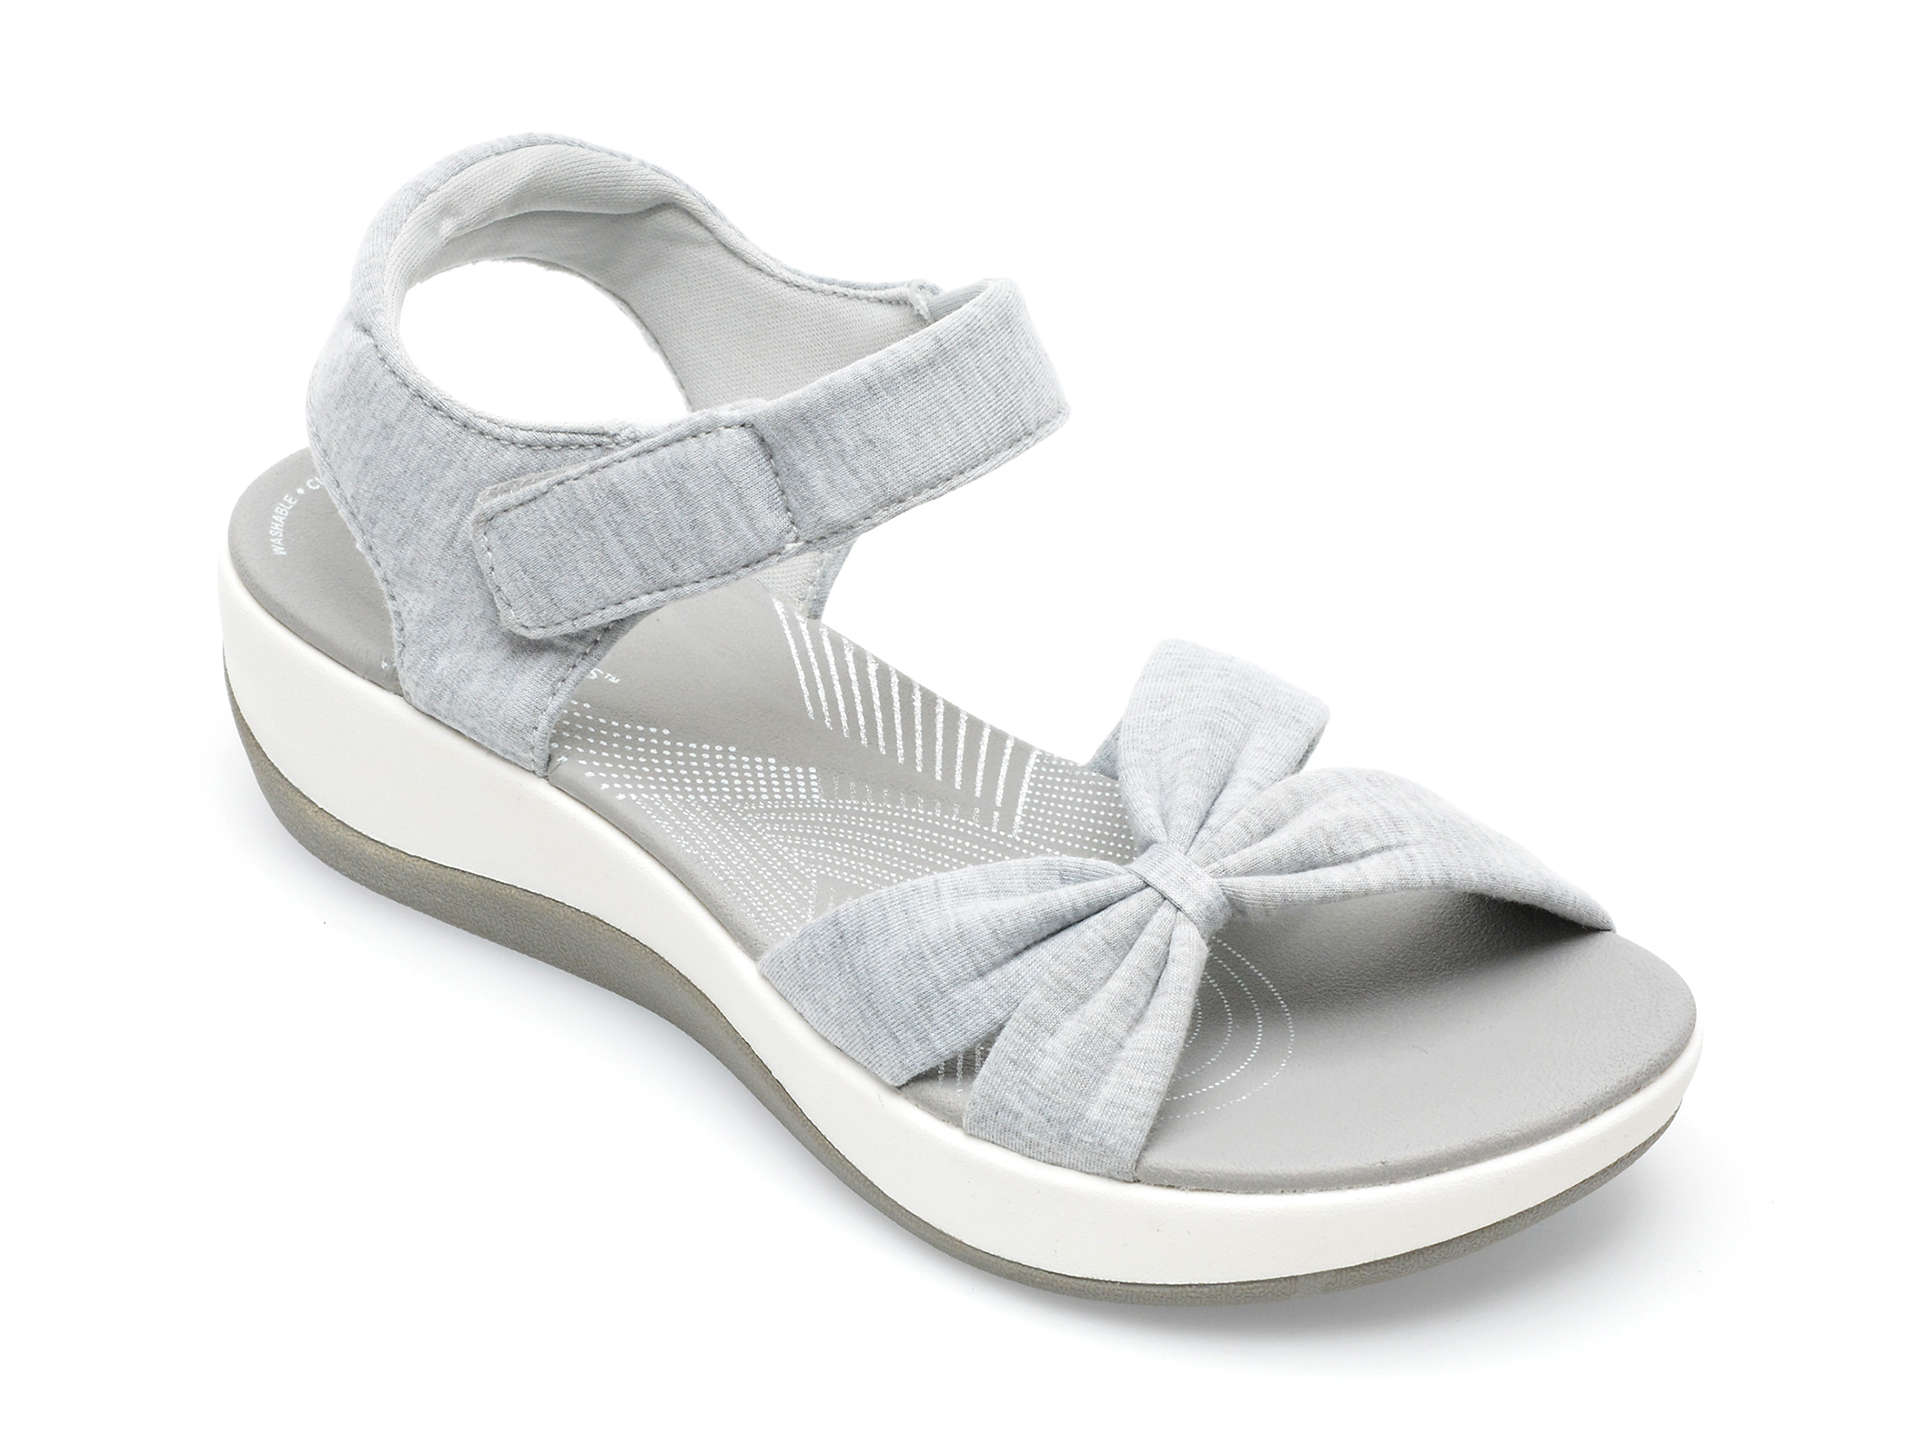 Sandale CLARKS gri, ARLA SHORE 0912, din material textil femei 2023-11-28